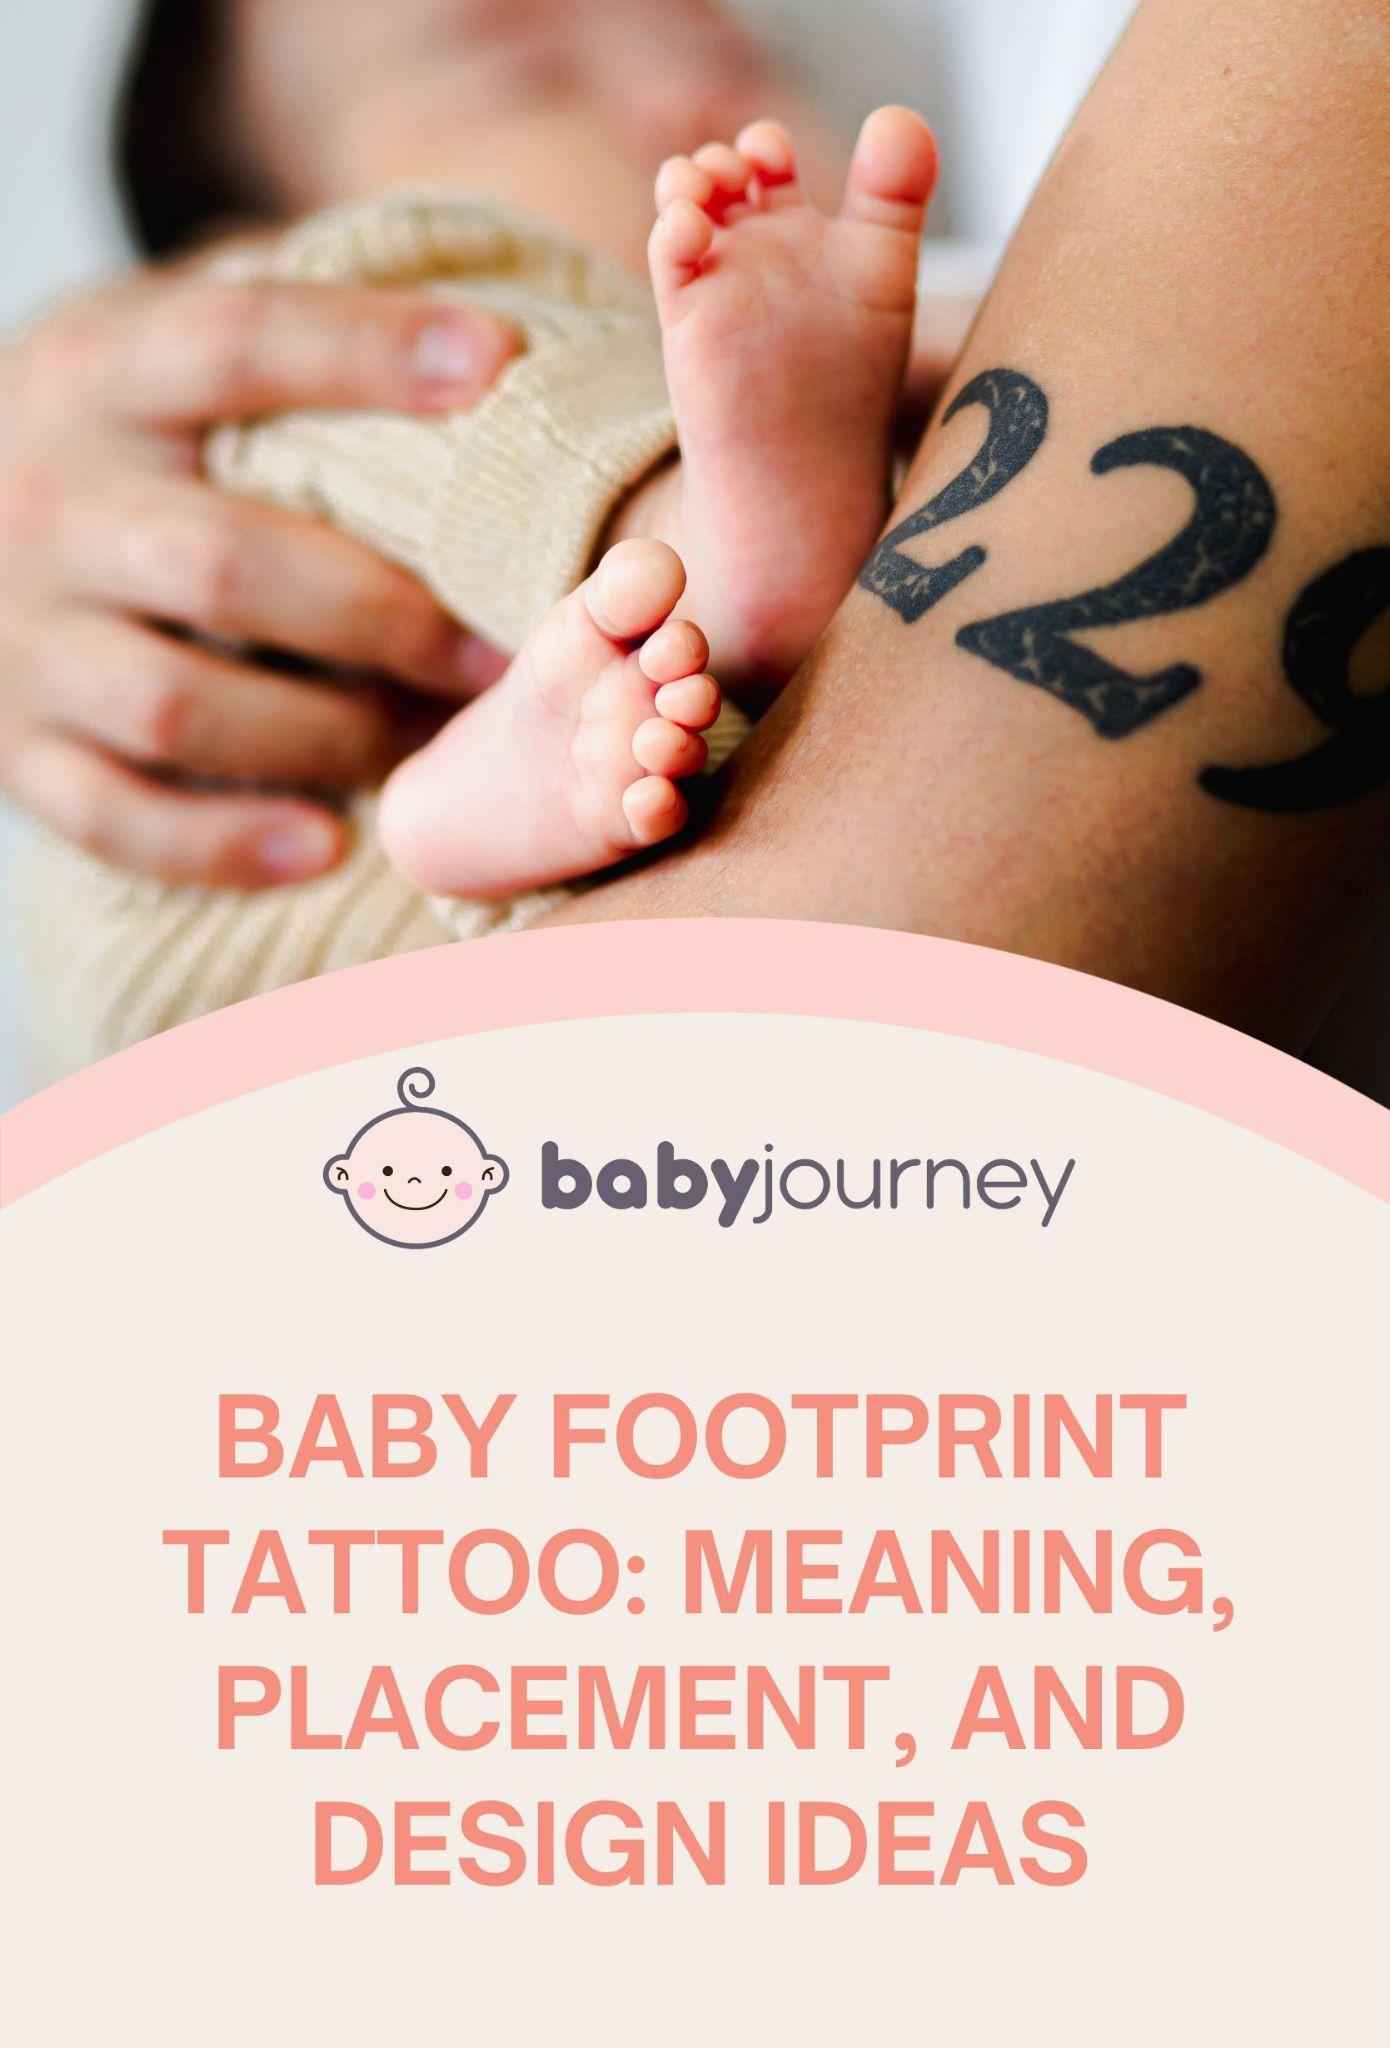 Baby Footprint Tattoo Pinterest - Baby Journey